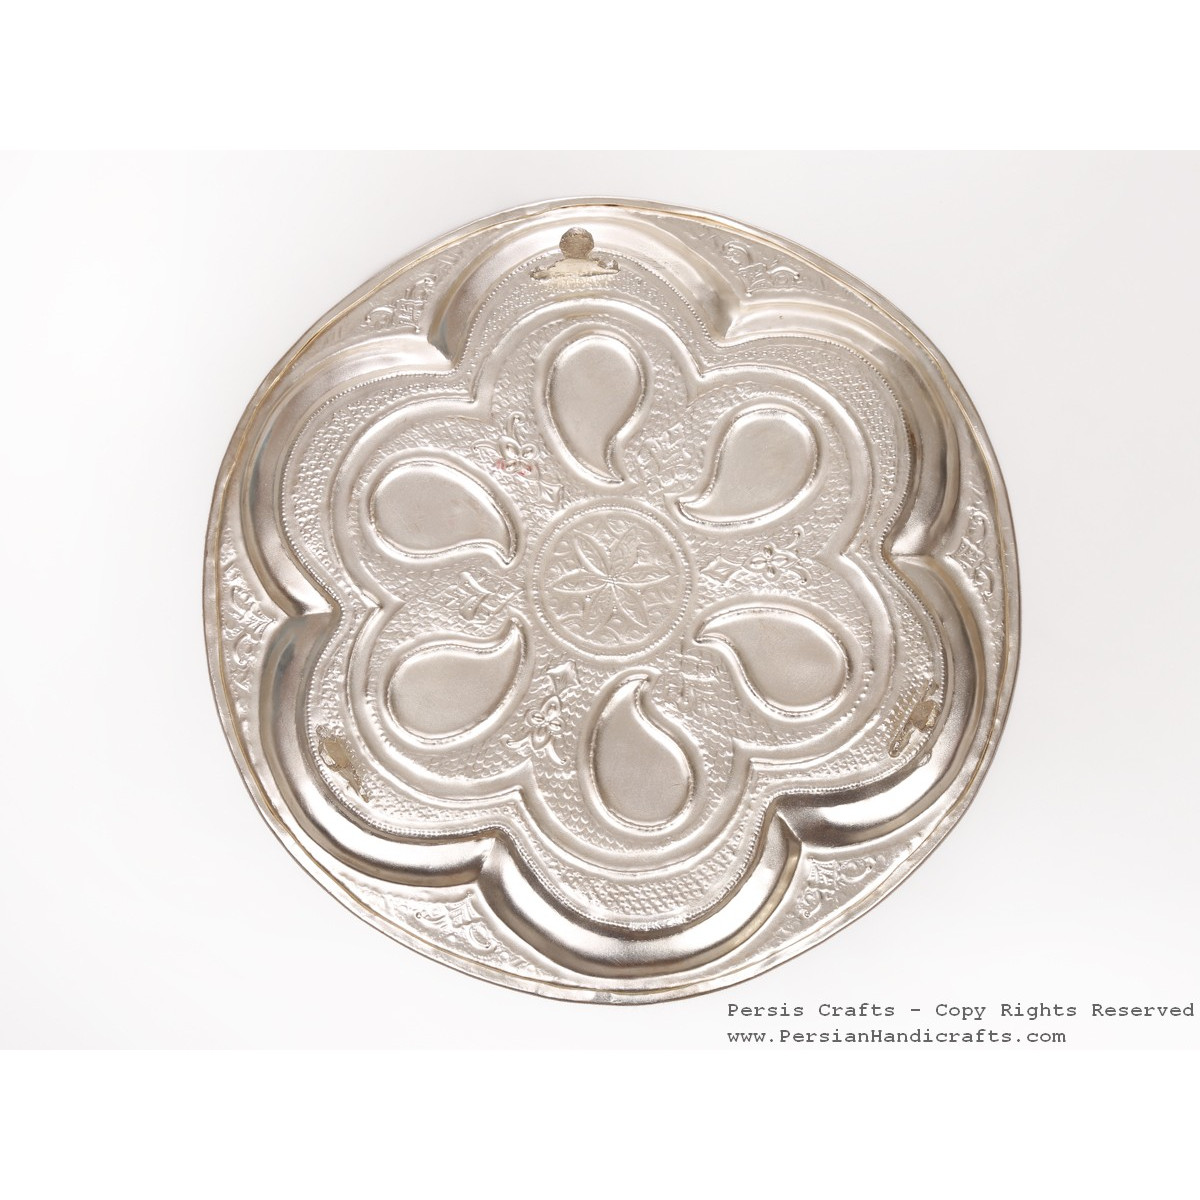 Enamel Engraved Tea Tray - HE3049-Persian Handicrafts